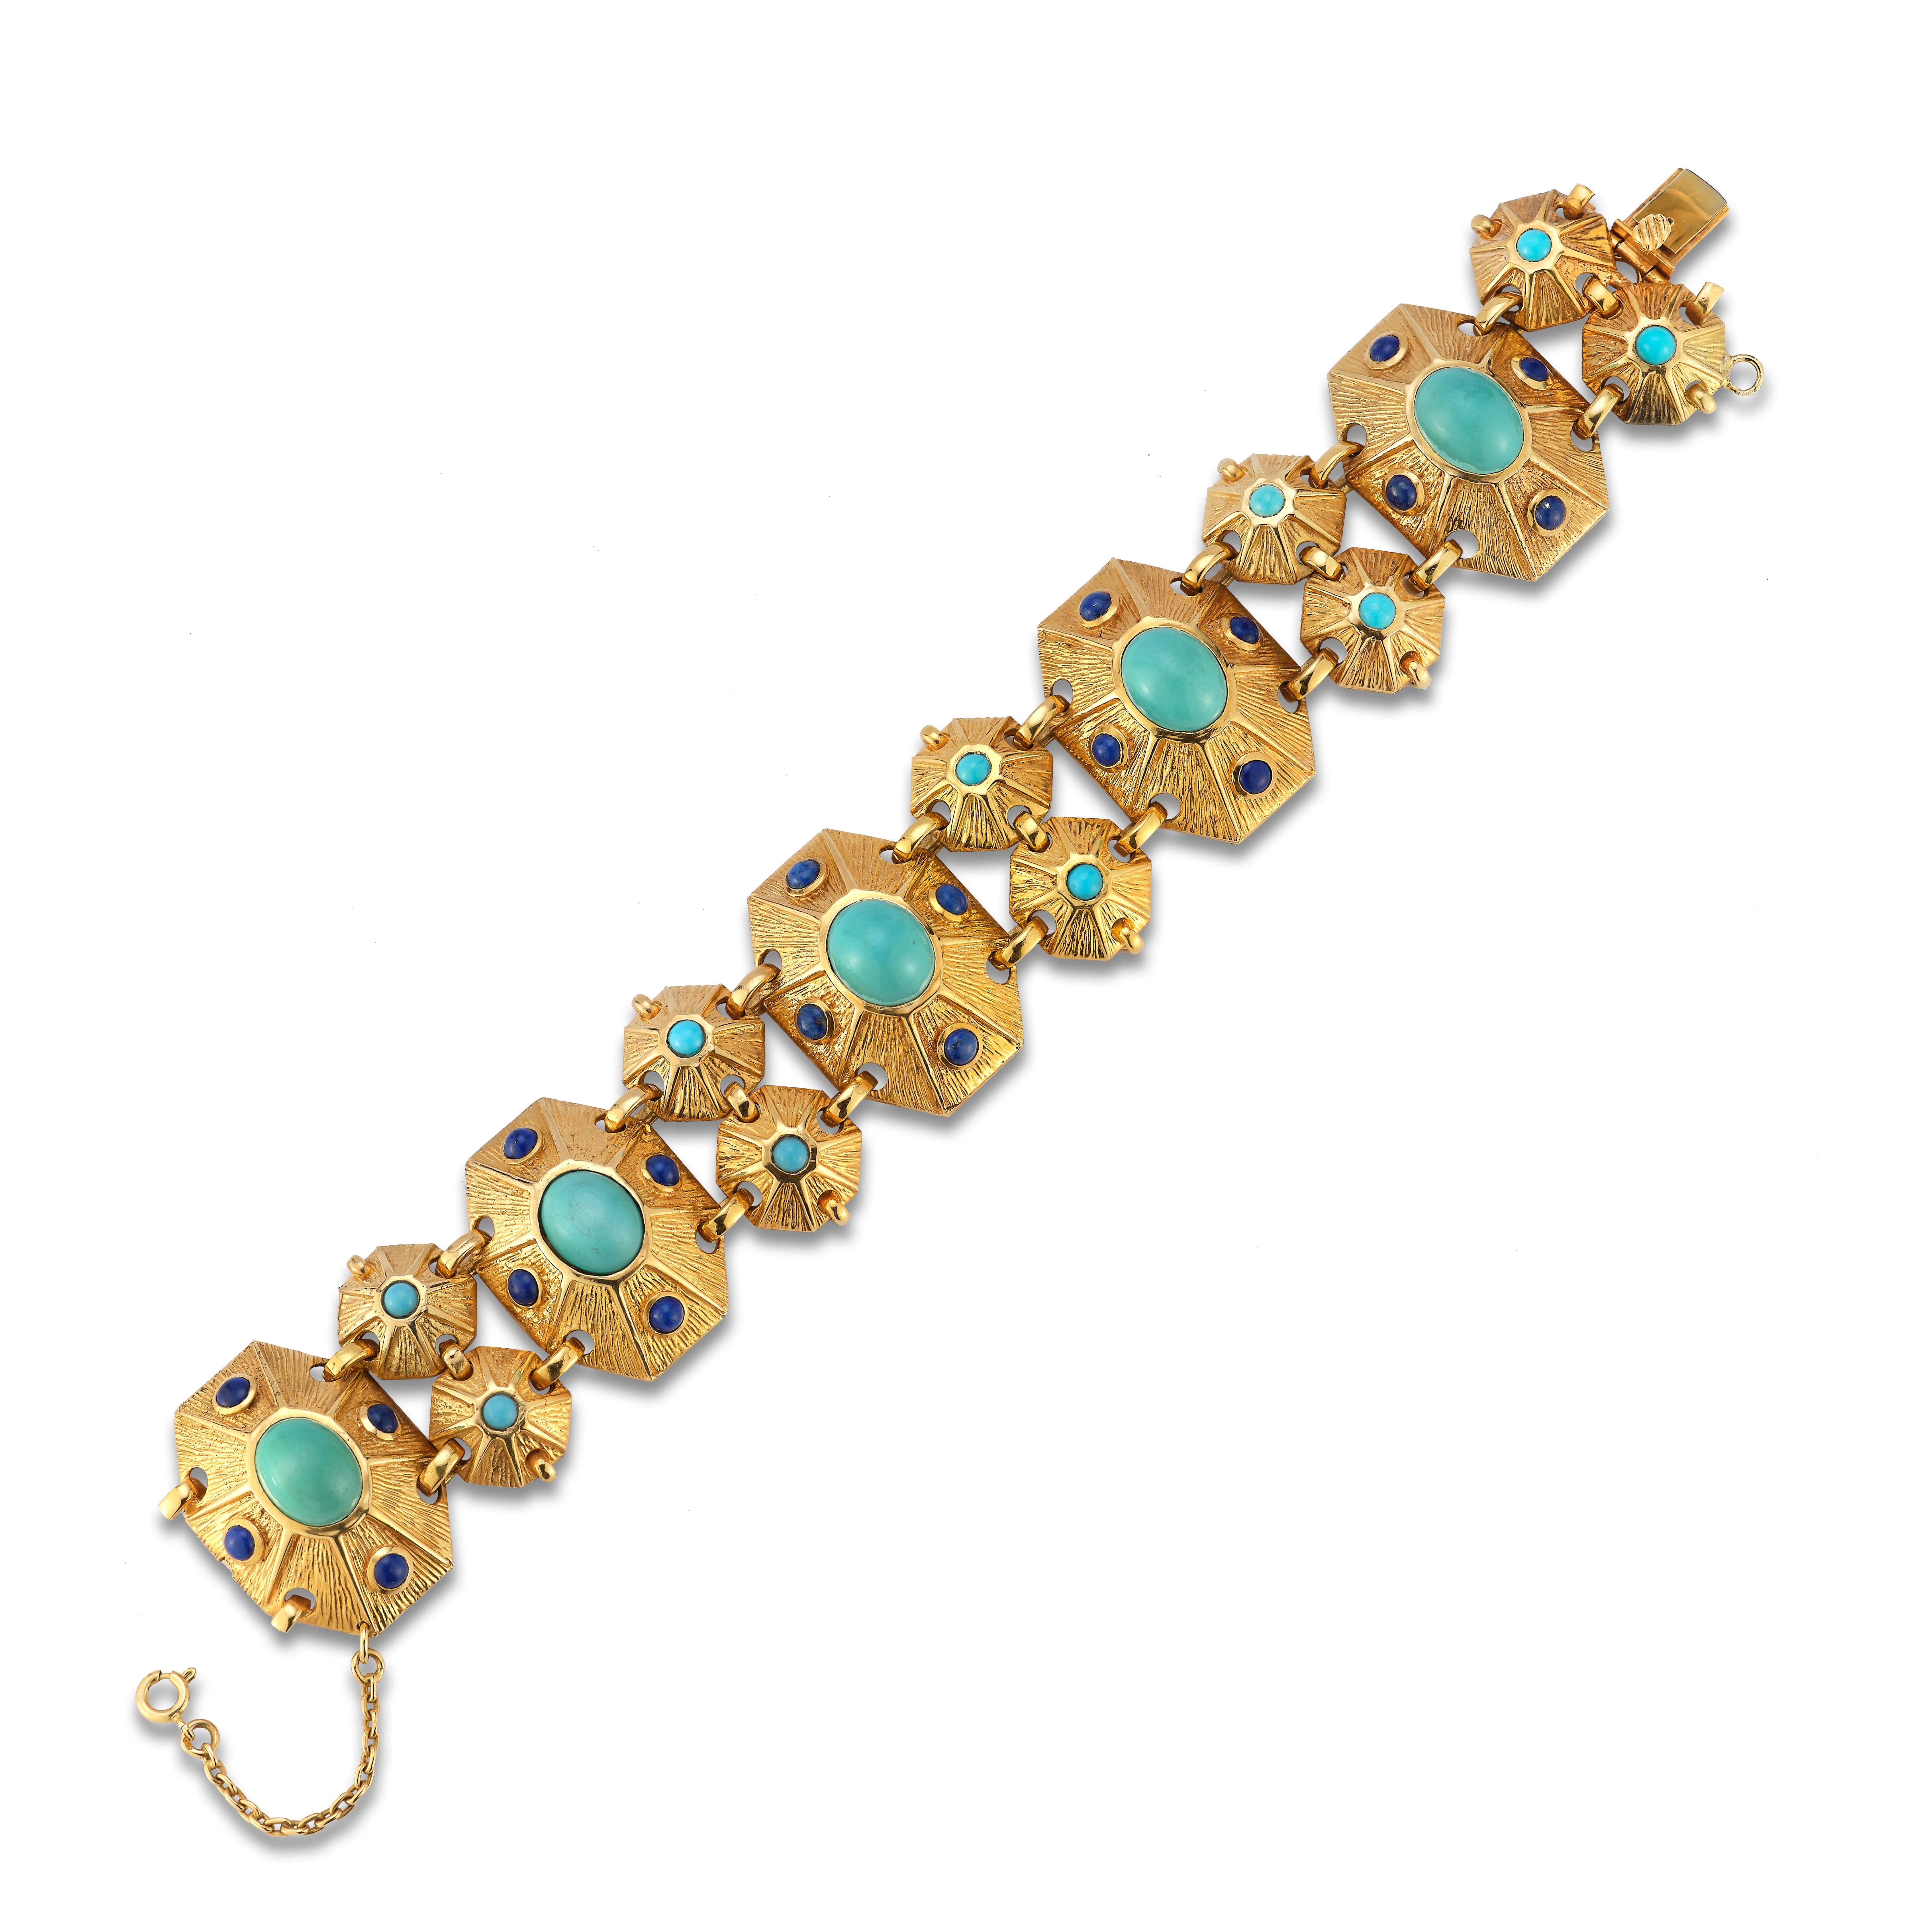 Tiffany & Co. Turquoise & Lapis Lazuli Bracelet -

An 18 karat gold link bracelet set with 5 large cabochon turquoise, 10 small cabochon turquoise and 20 small cabochon lapis lazuli

Measurements: 8.5